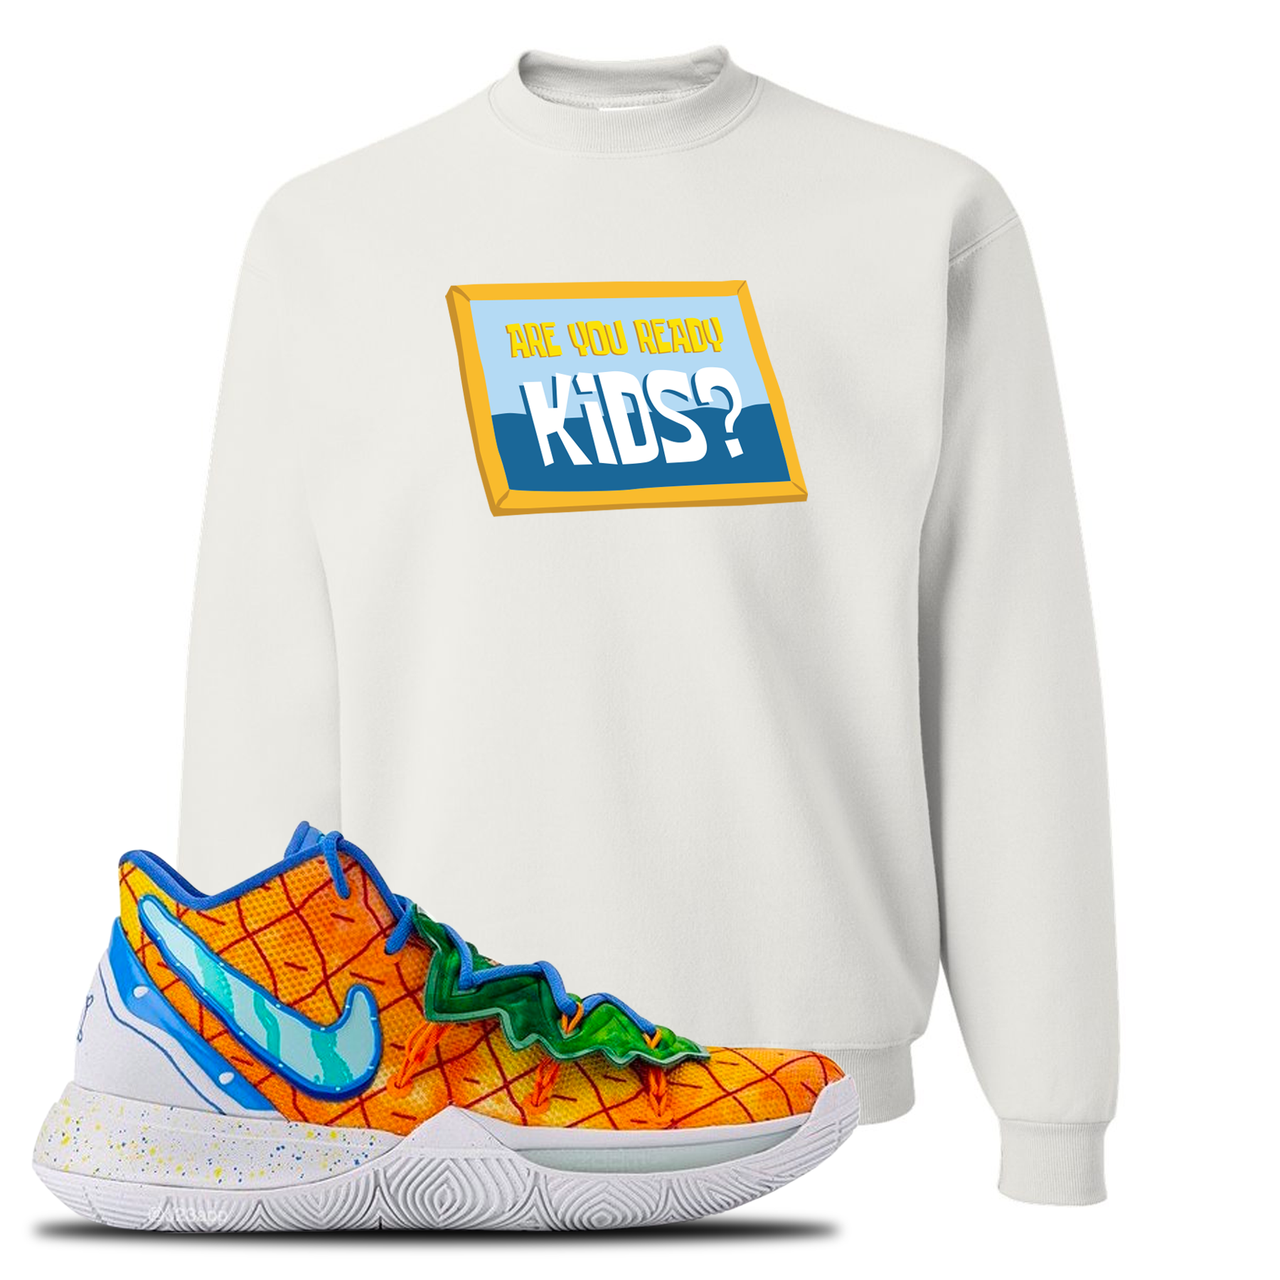 Kyrie 5 Pineapple House Are You Ready Kids? White Sneaker Hook Up Crewneck Sweatshirt